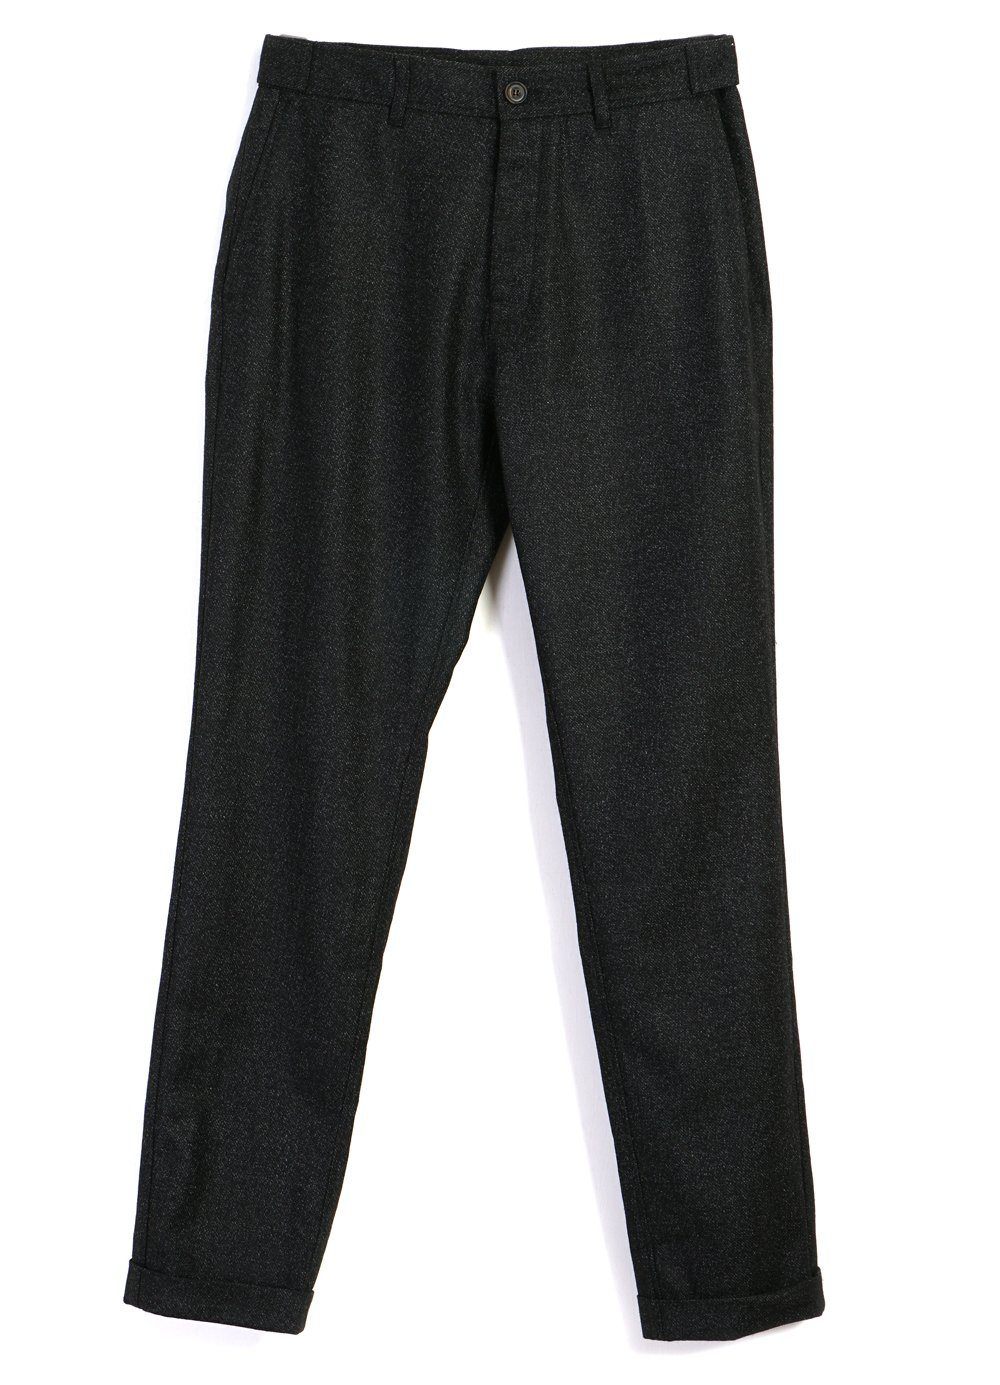 HANSEN GARMENTS - FINN | Side Buckle Regular Trousers | Black Marble - HANSEN Garments